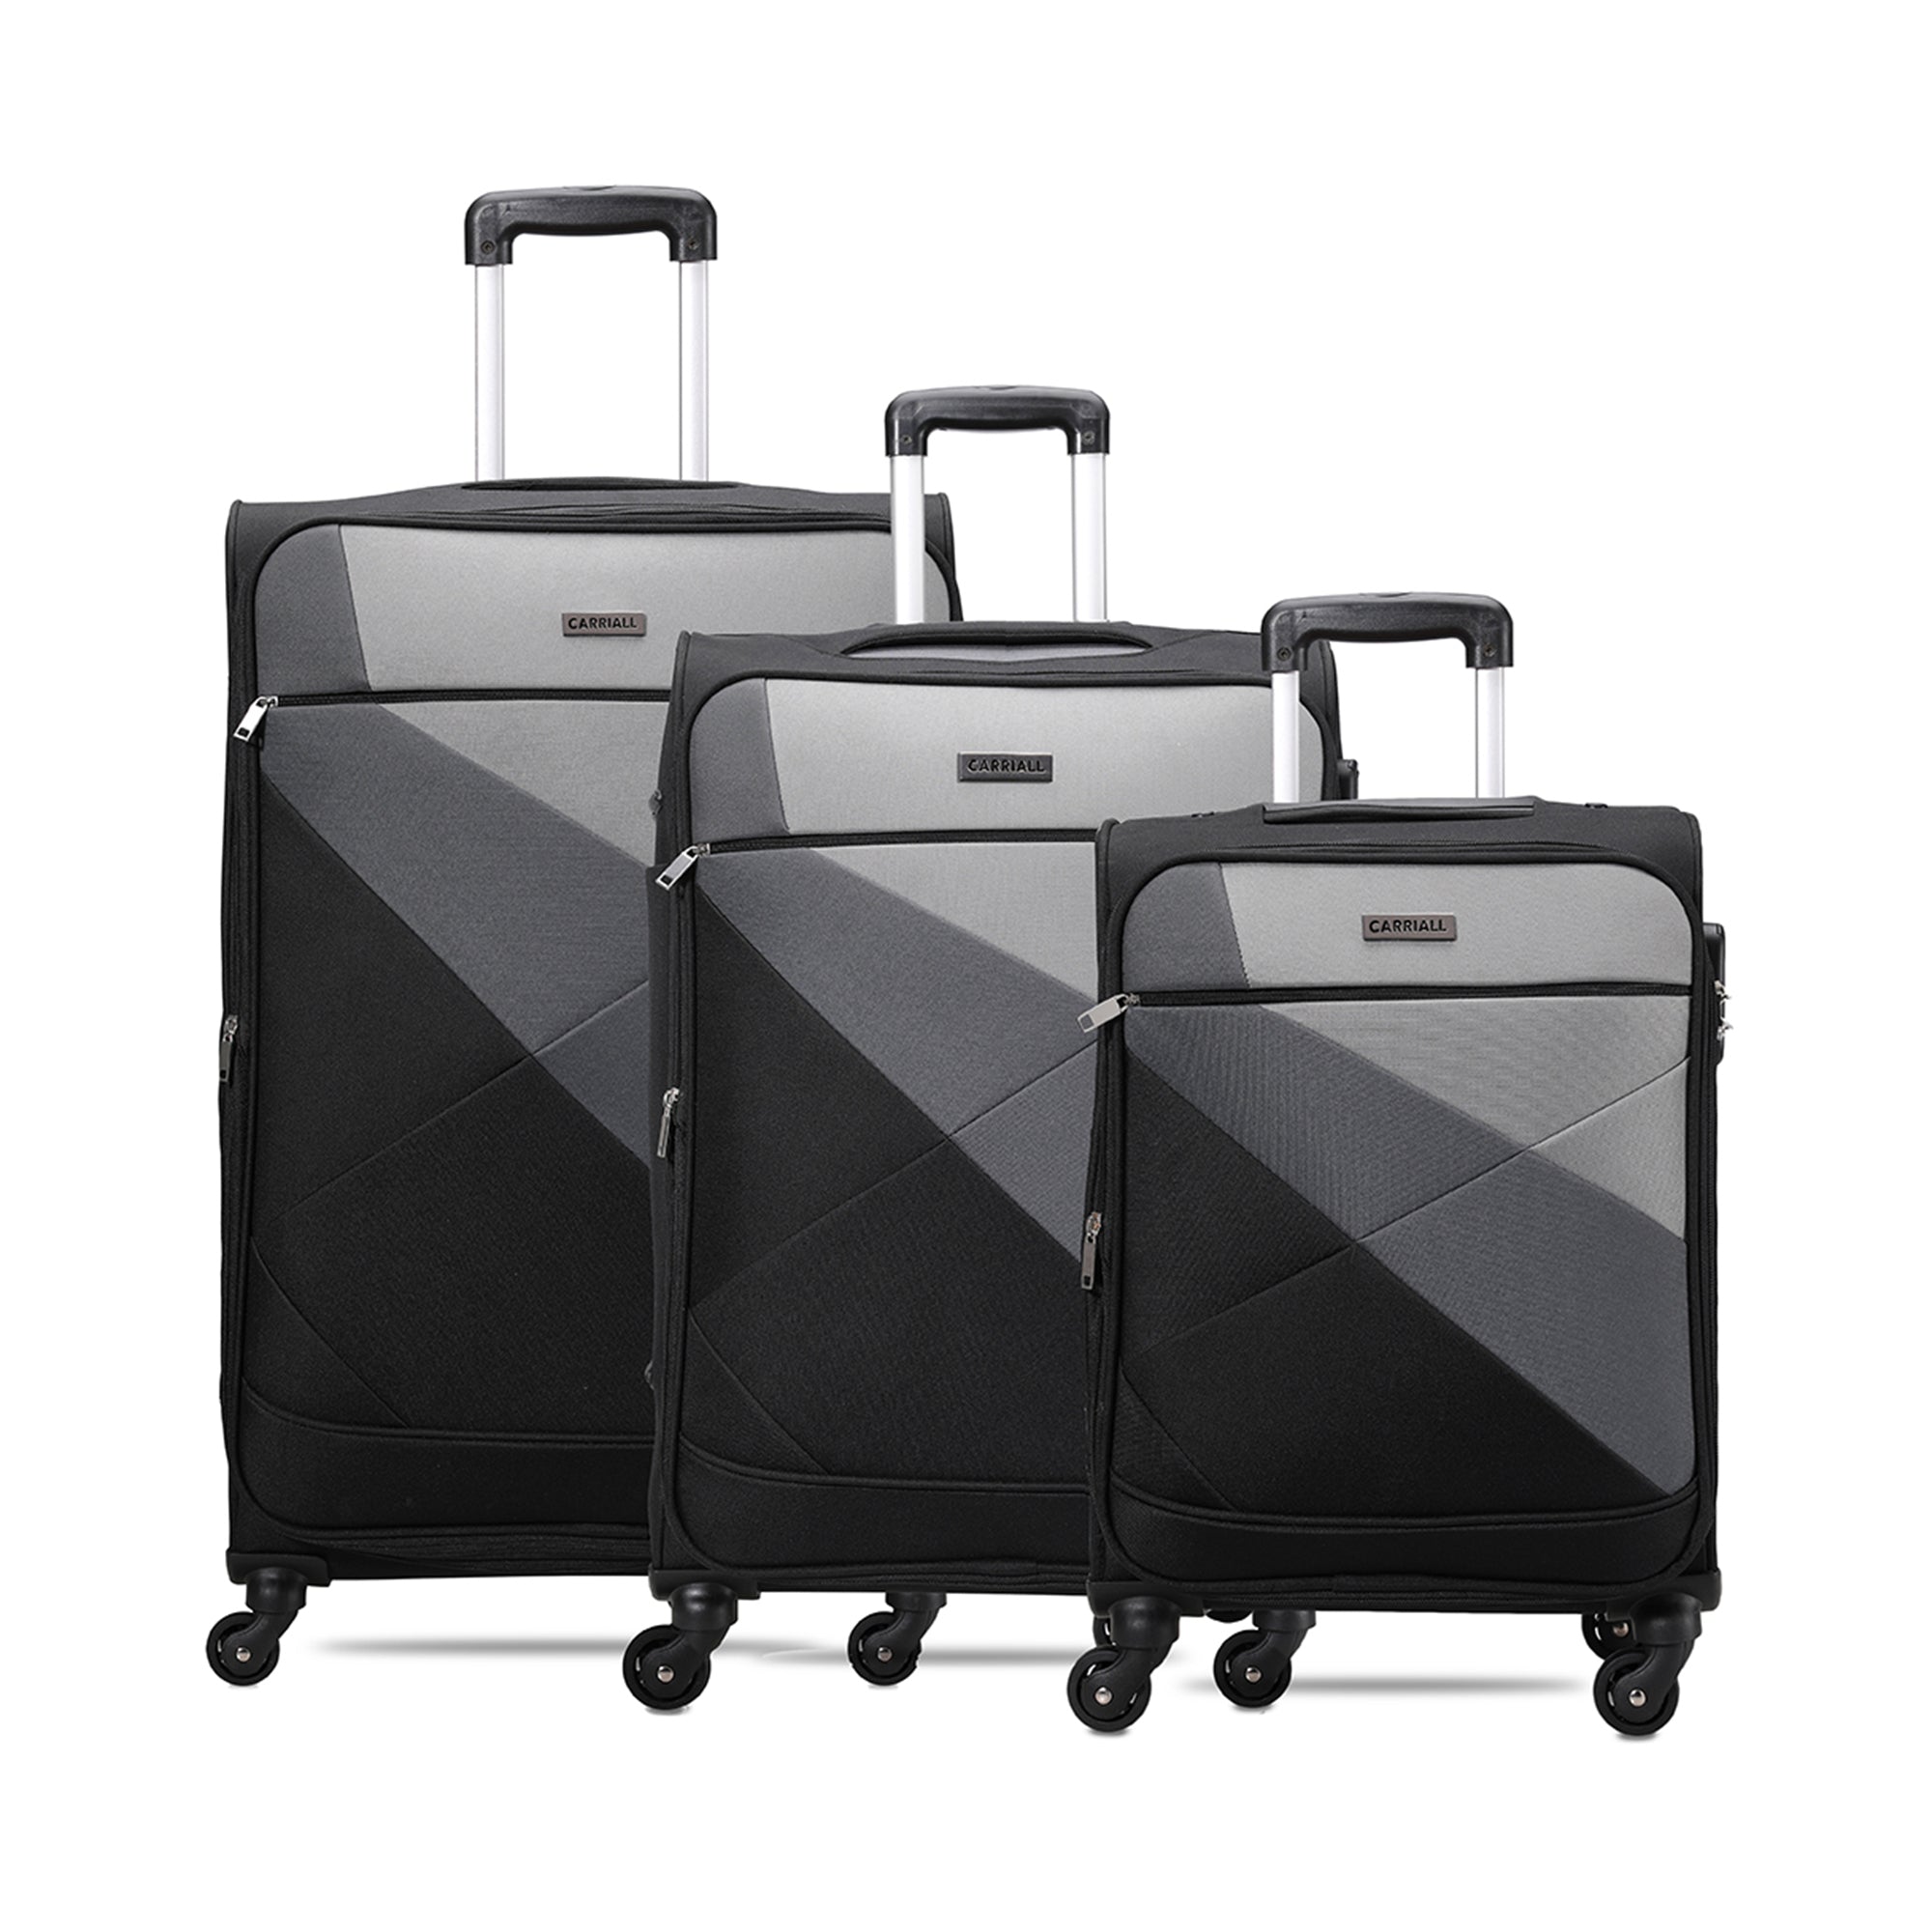 Vista Luggage Set of 3